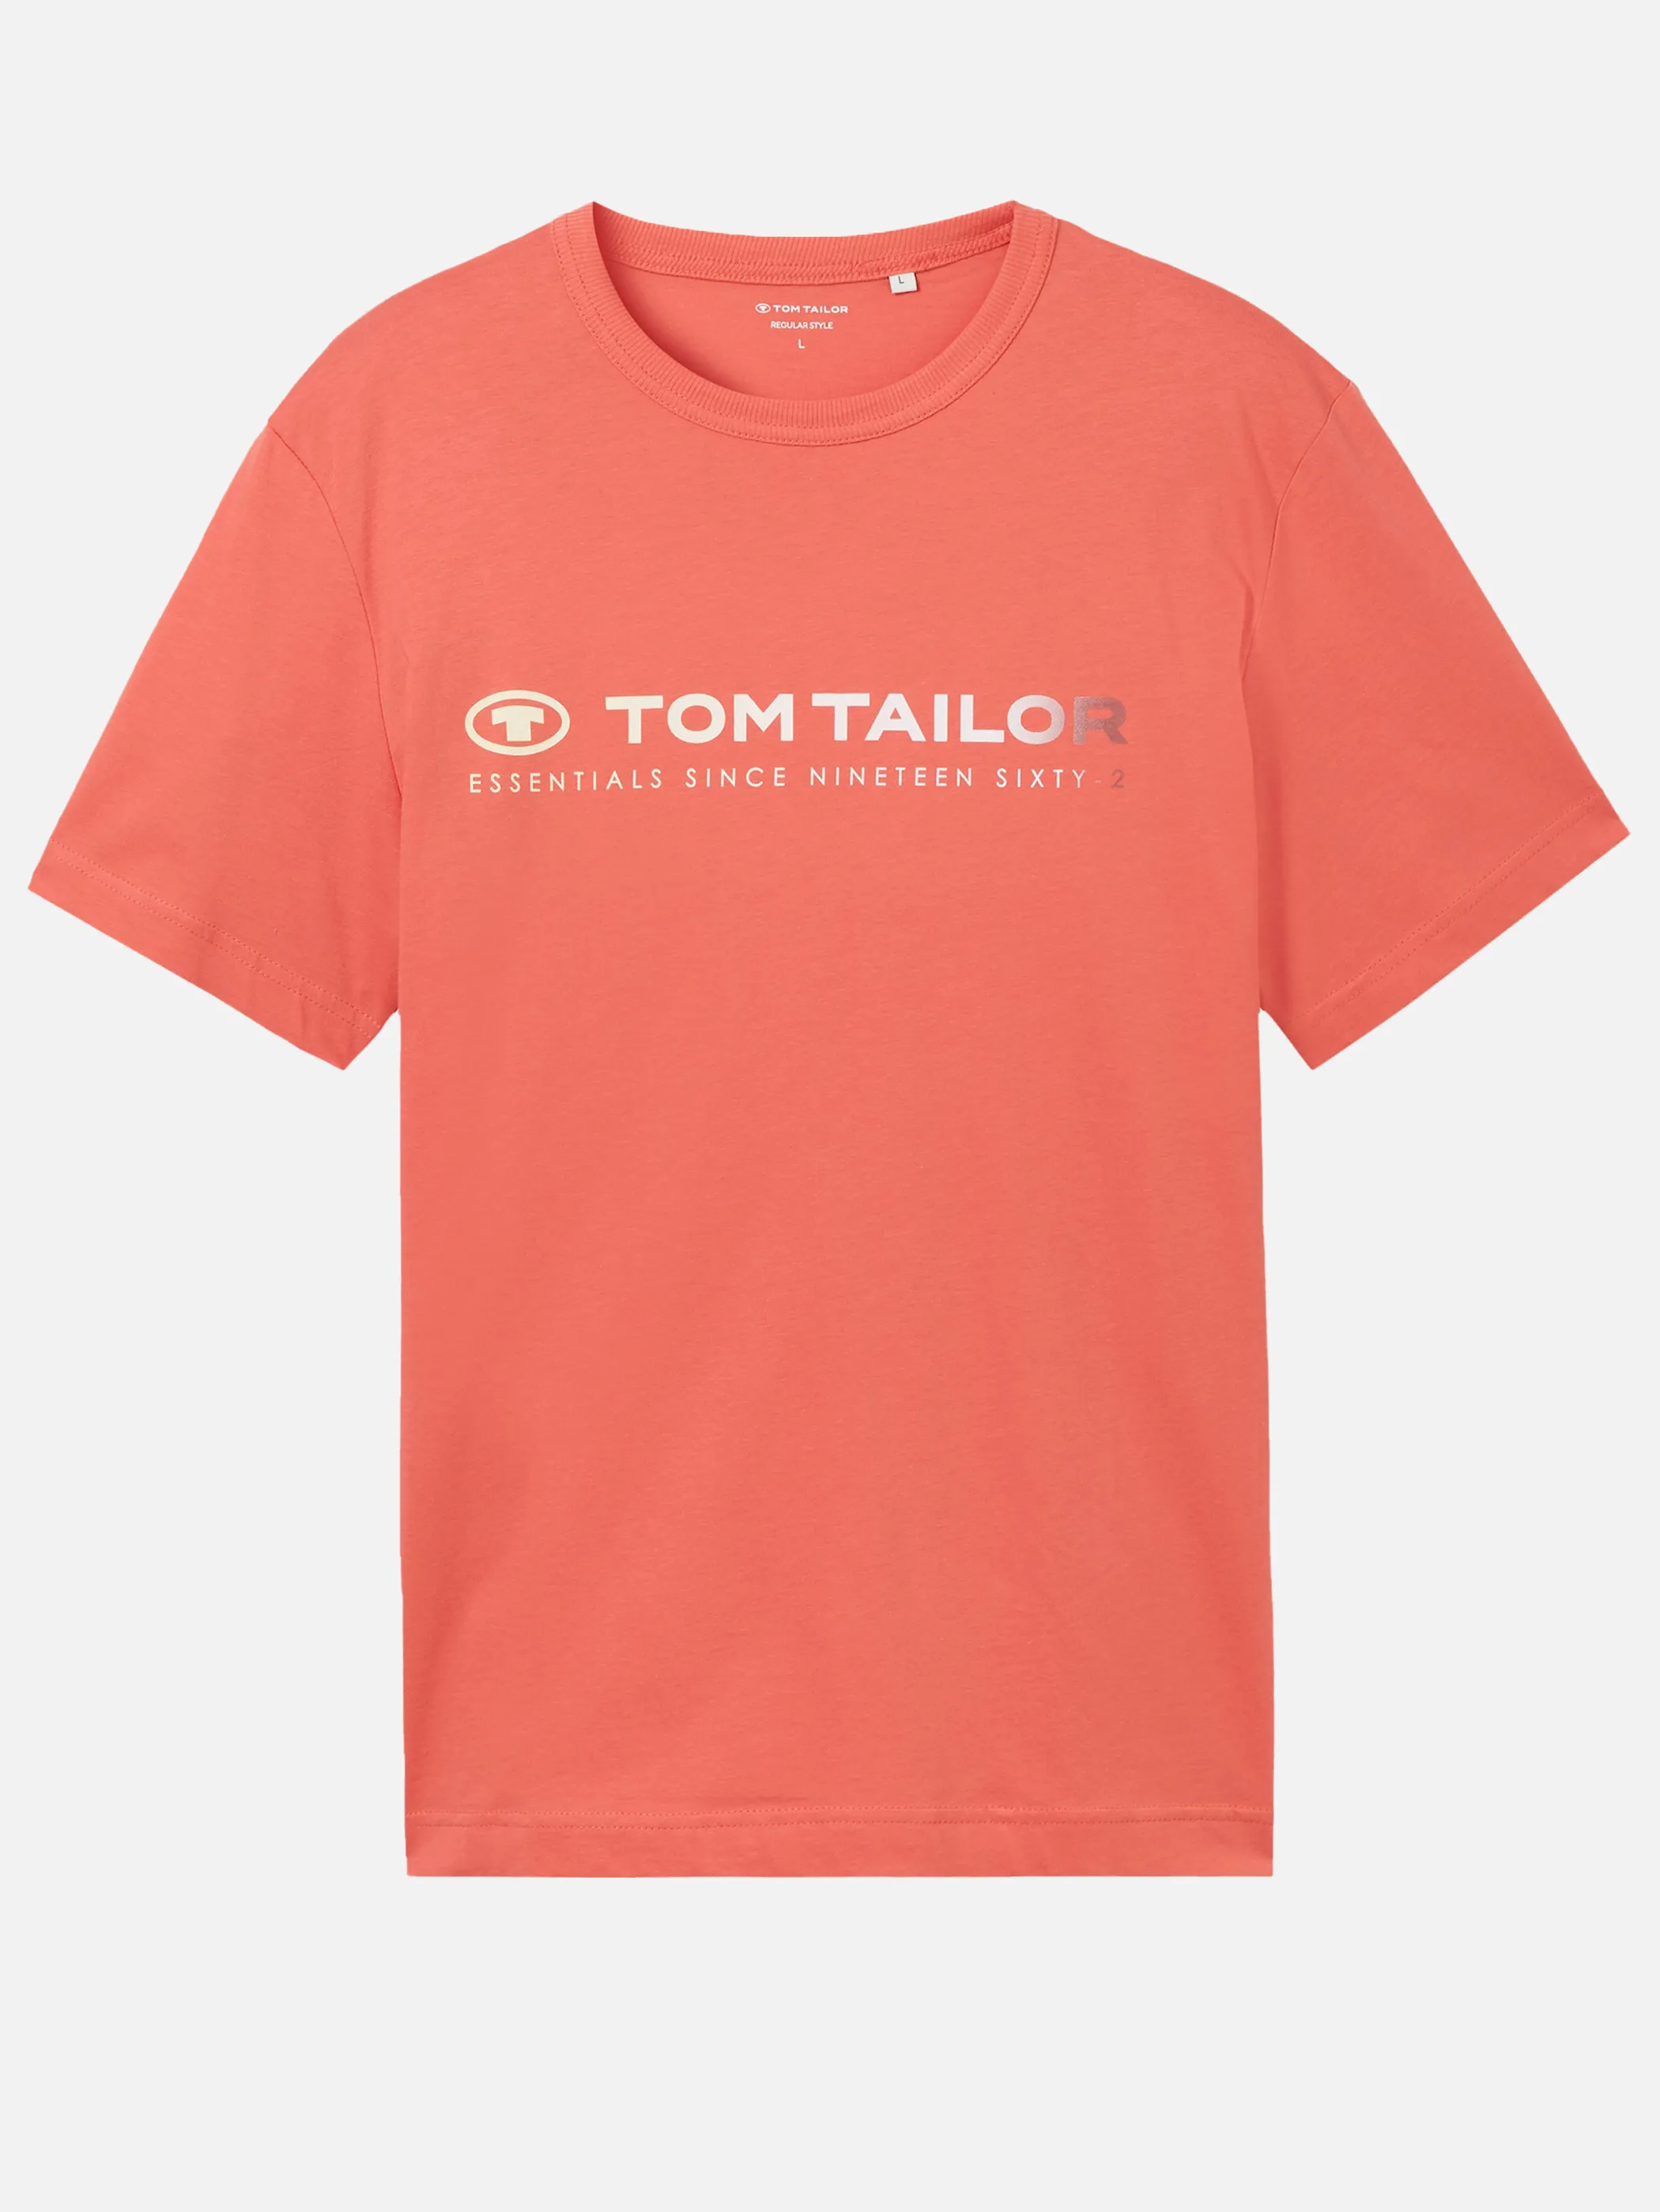 Tom Tailor 1041855 printed t-shirt Pink 895629 26202 1